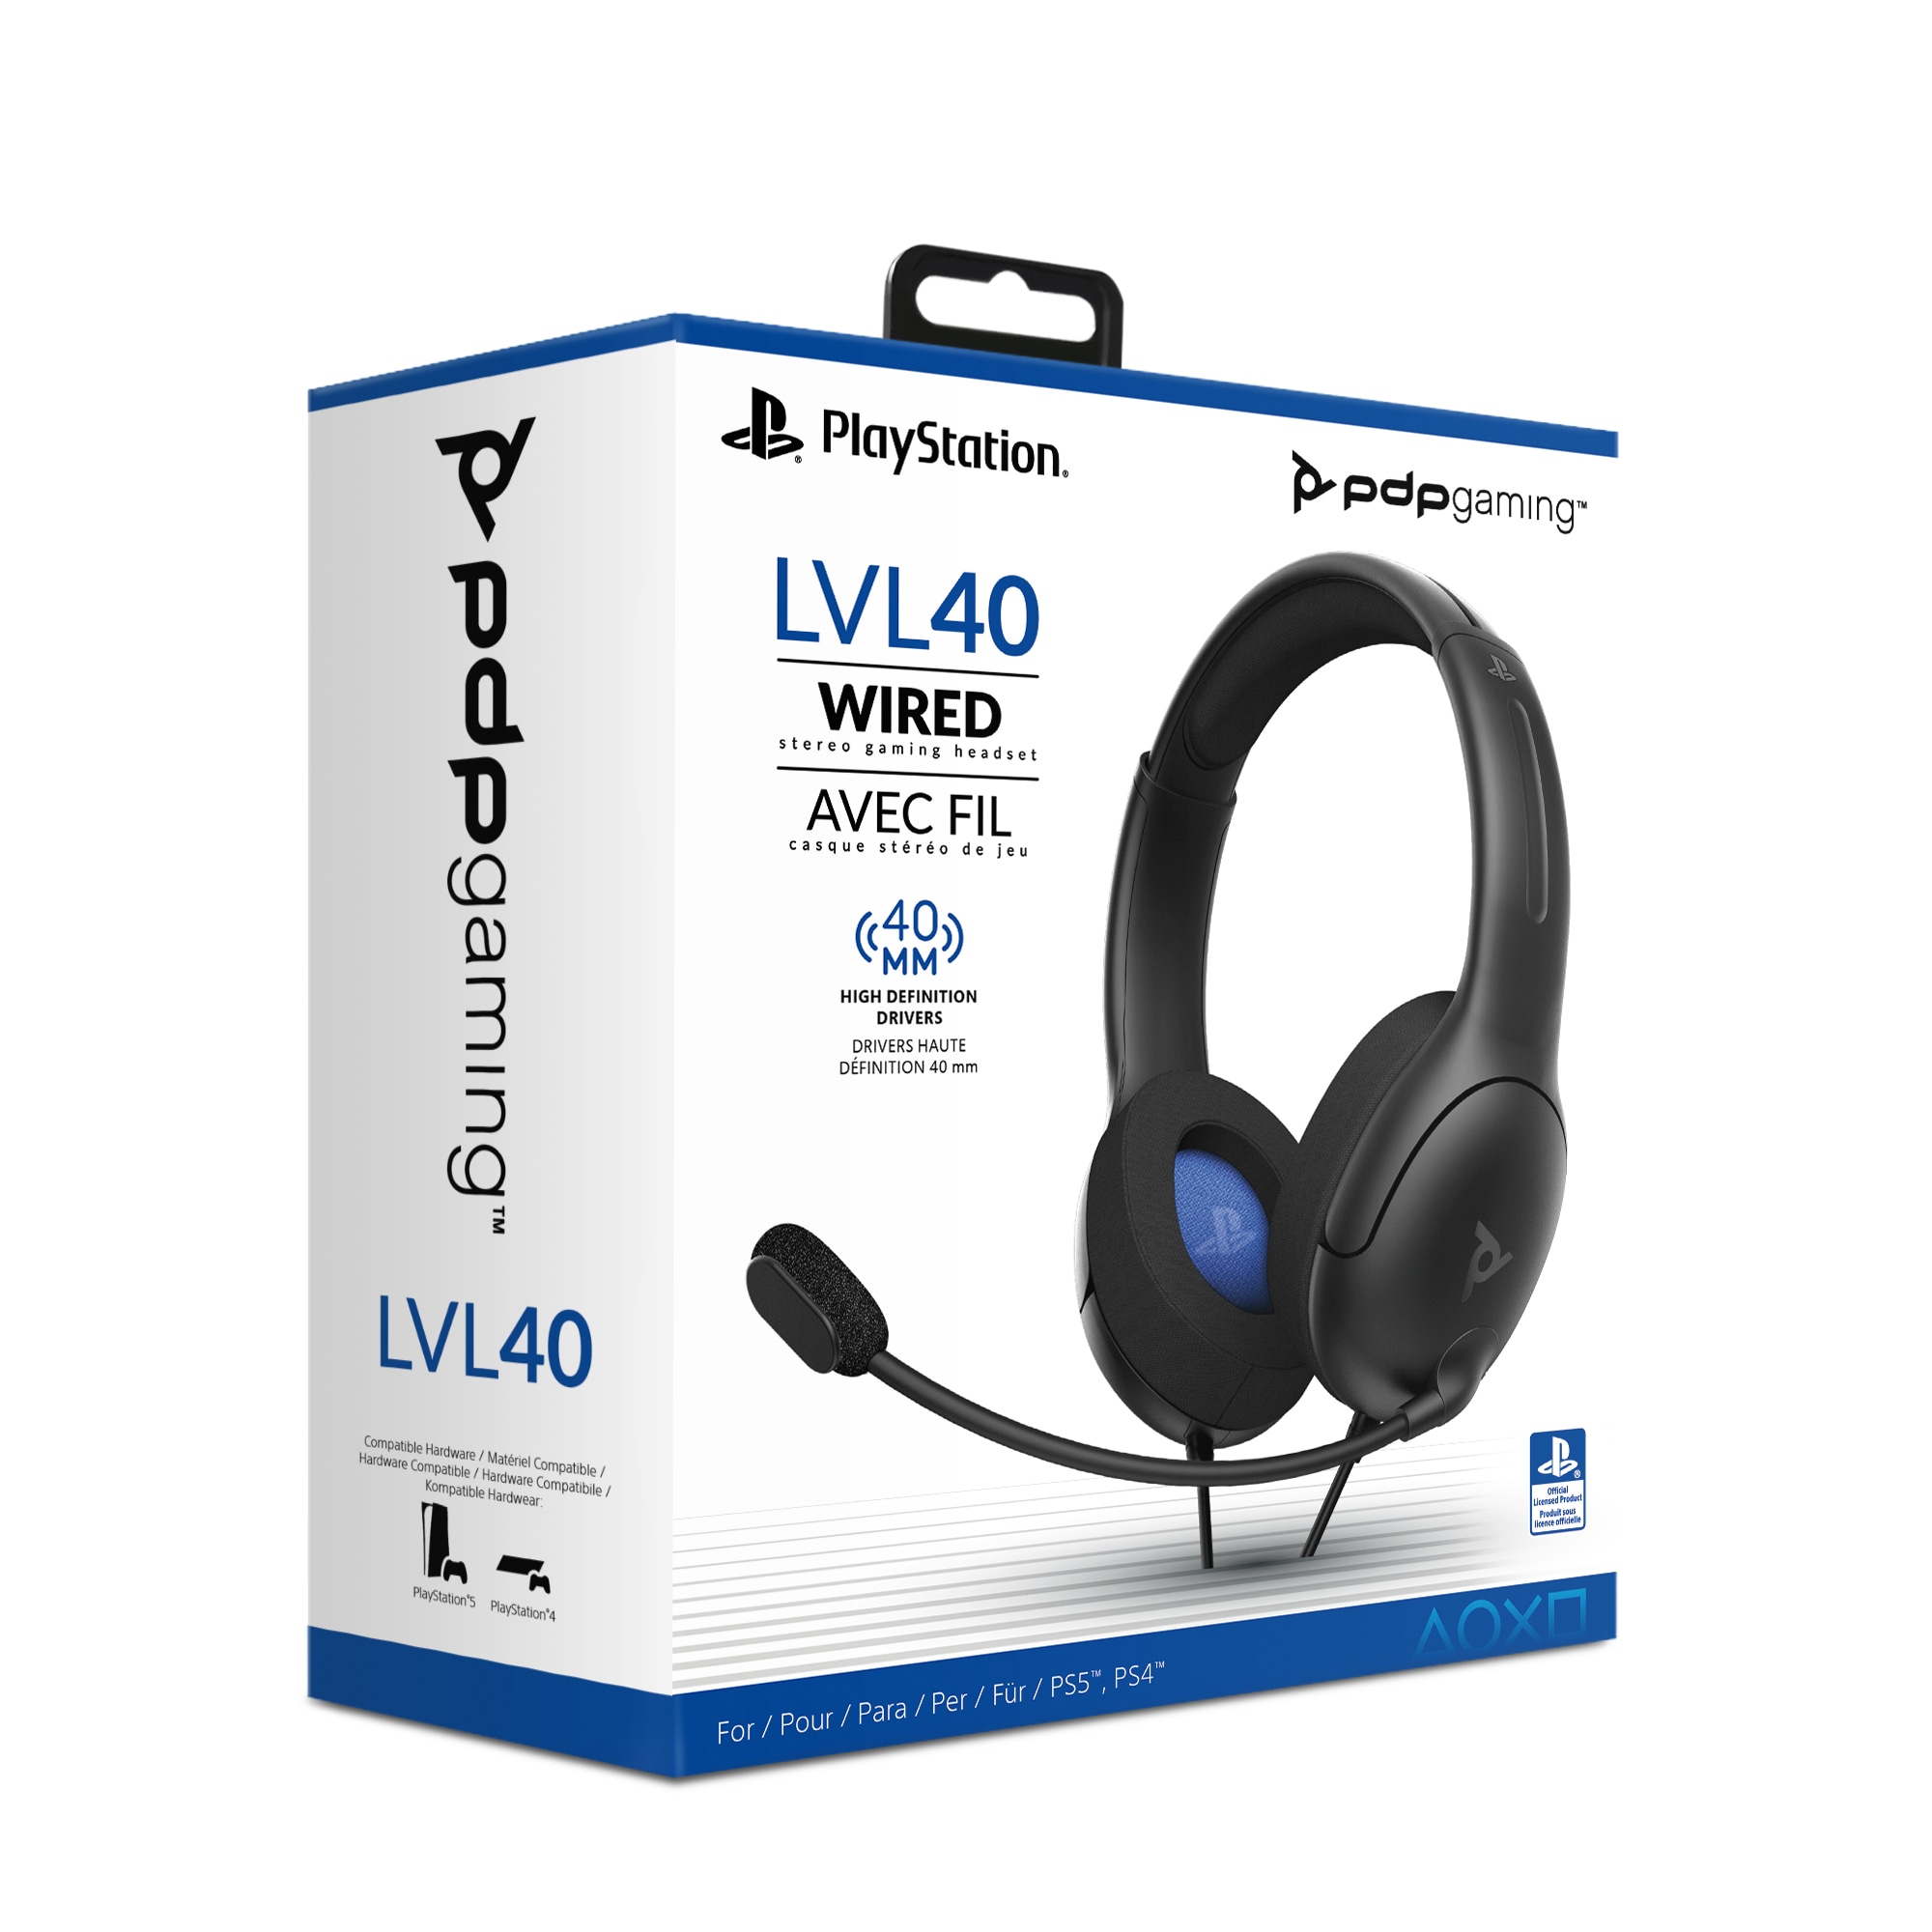 Performance LVL40 Stereo Products - Kopfhörer Headset 4/5« Rechnung bestellen für PDP »PDP Playstation Designed auf